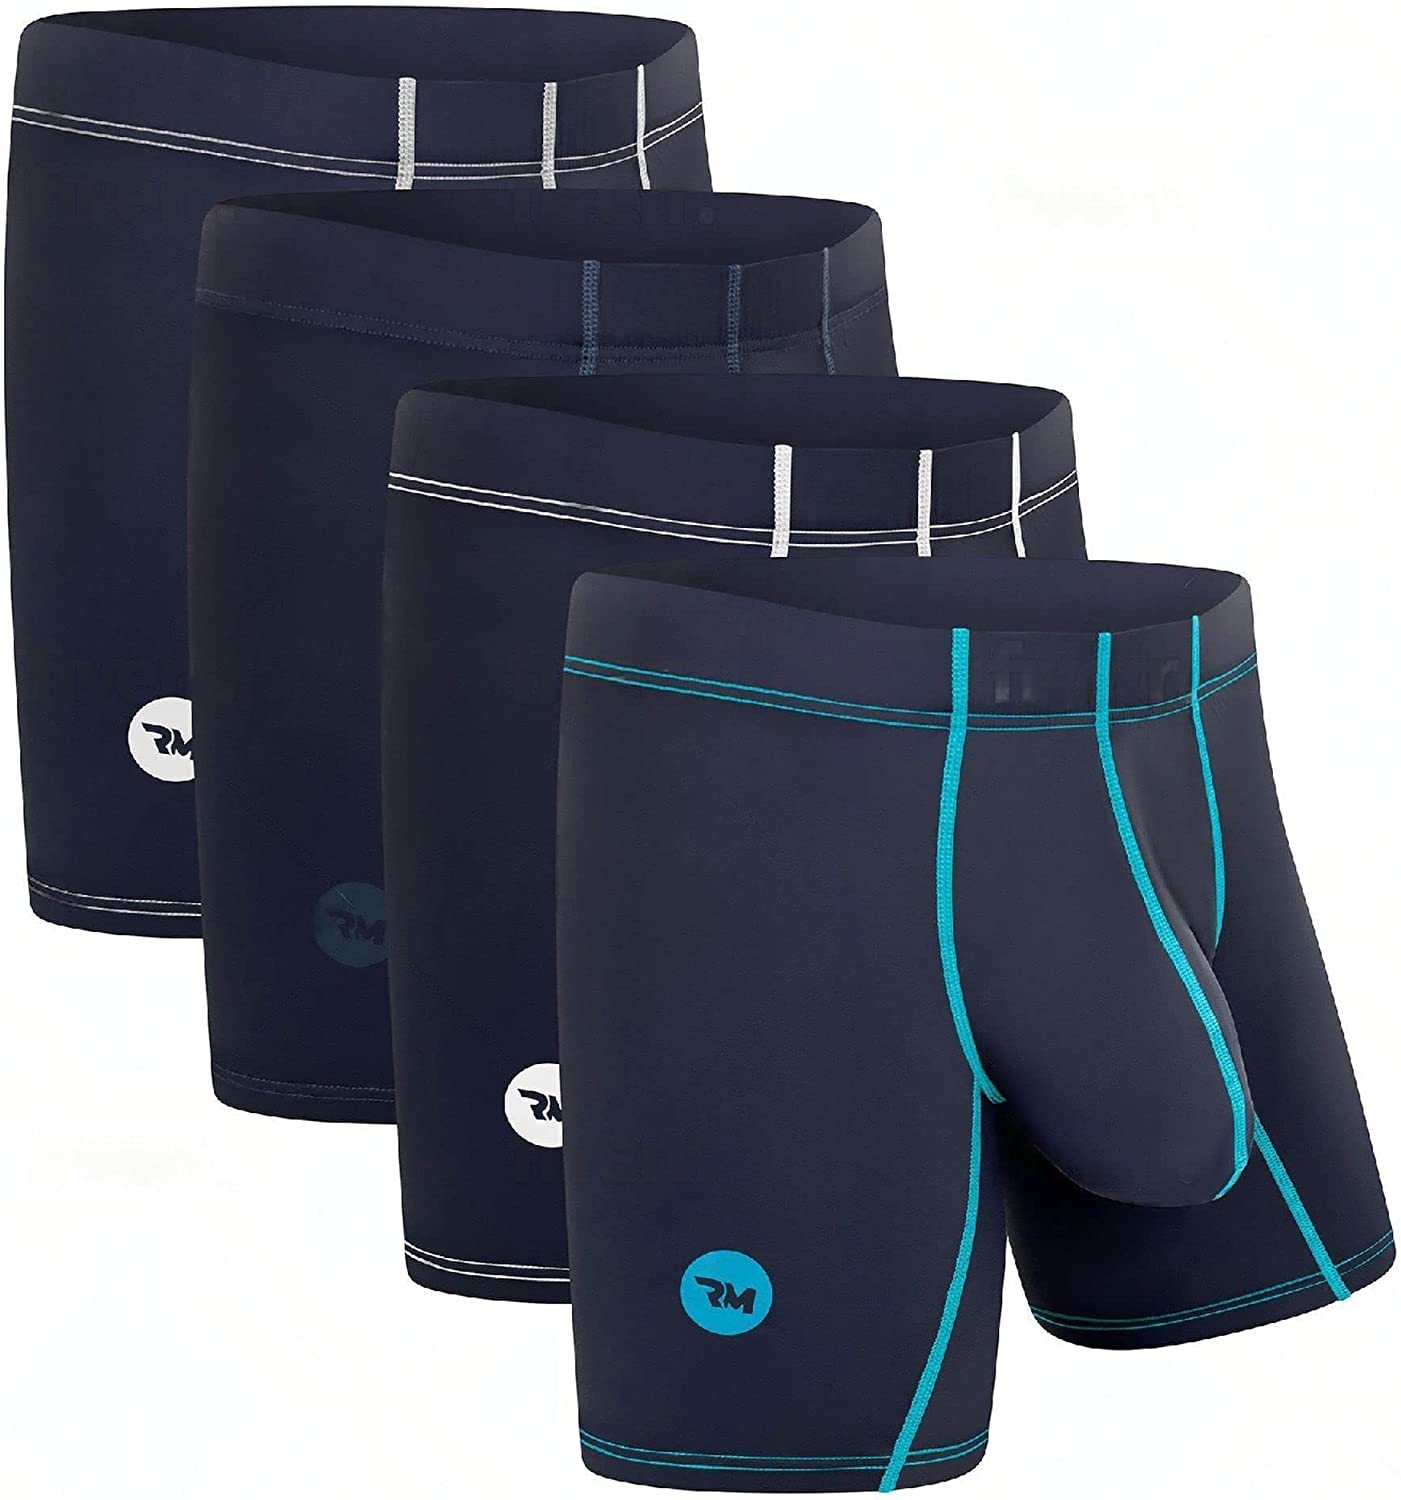 Real Men Bulge Enhancing Pouch Underwear for Men – 1 or 4 Pack Set